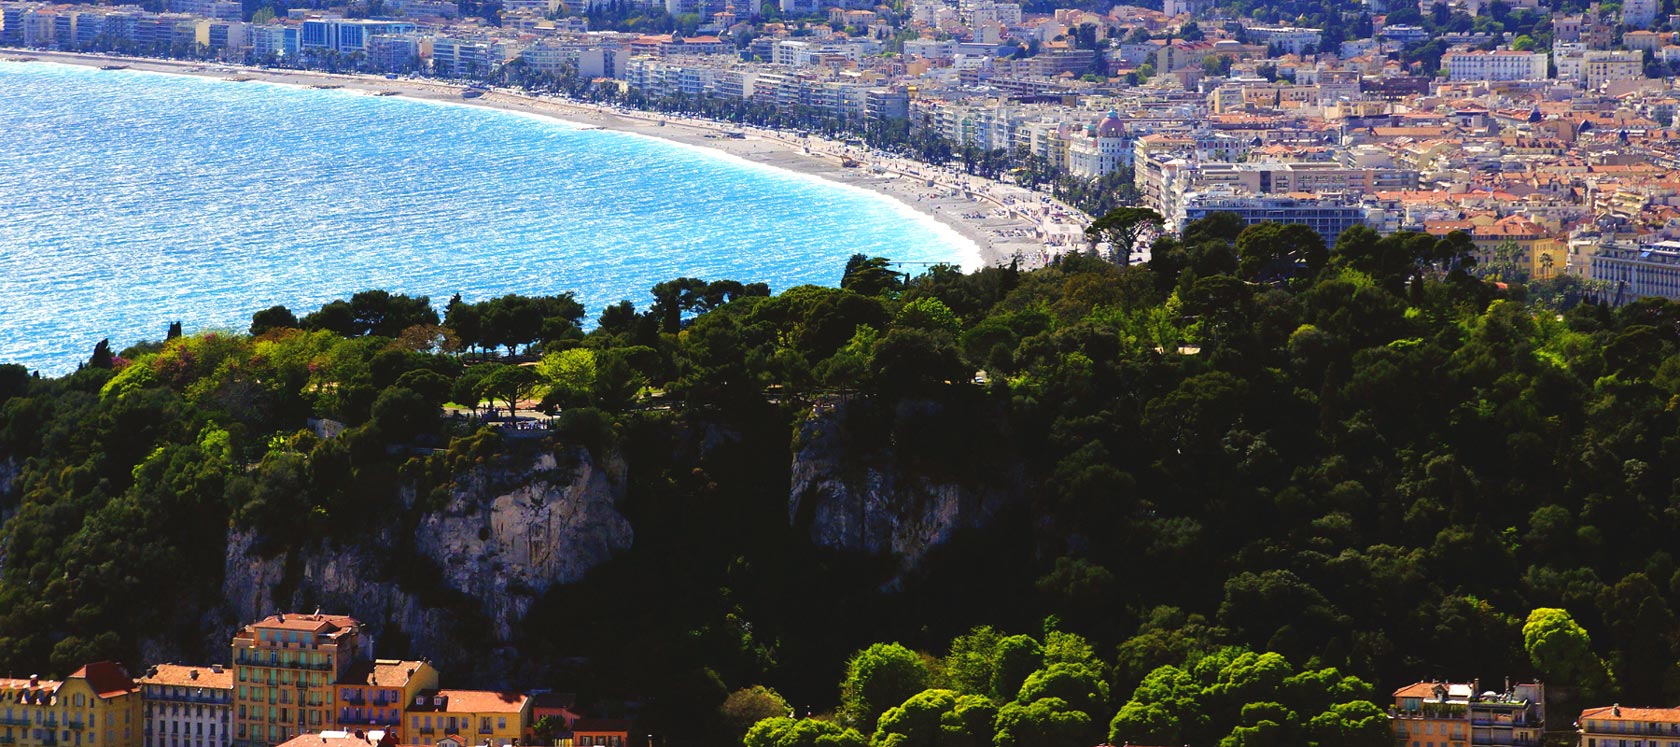 Pessimistisch Hectare Scepticisme Riviera Come True, tailored private tours on French Riviera